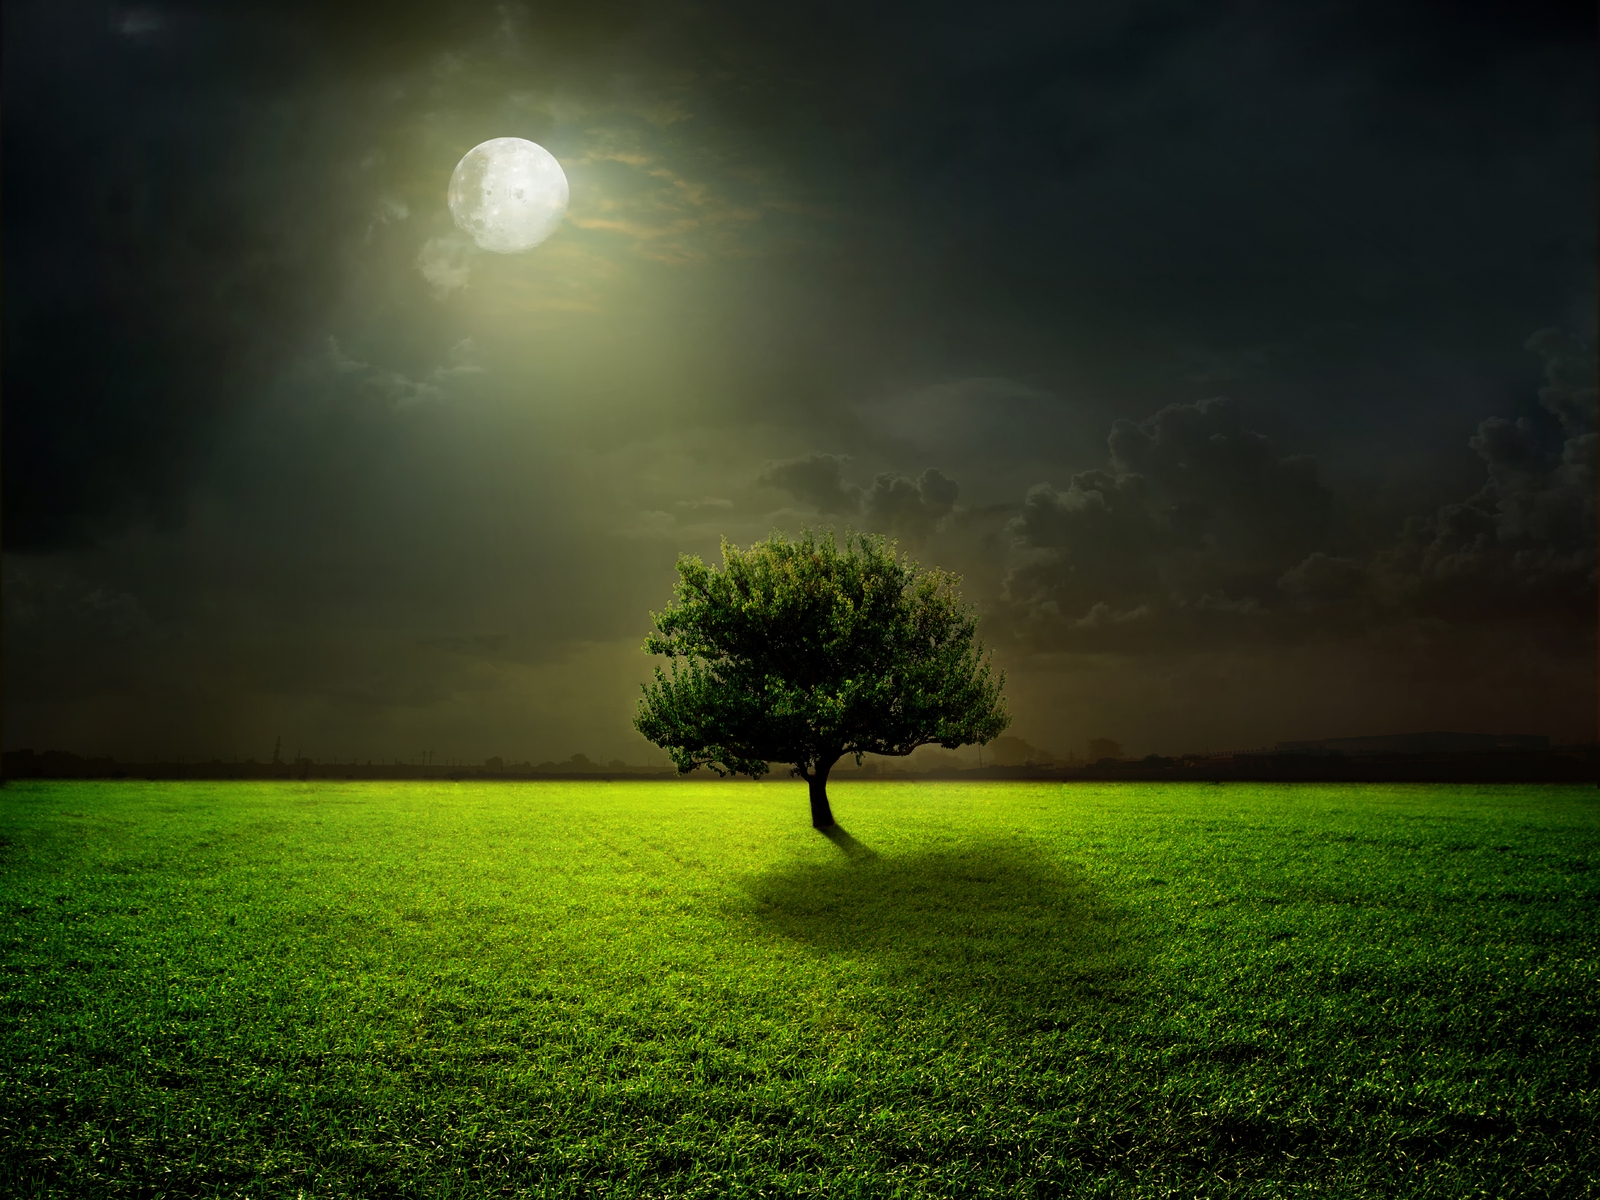 Картинка: Дерево, поле, трава, ночь, луна, полнолуние, свет, отражение, небо, облака